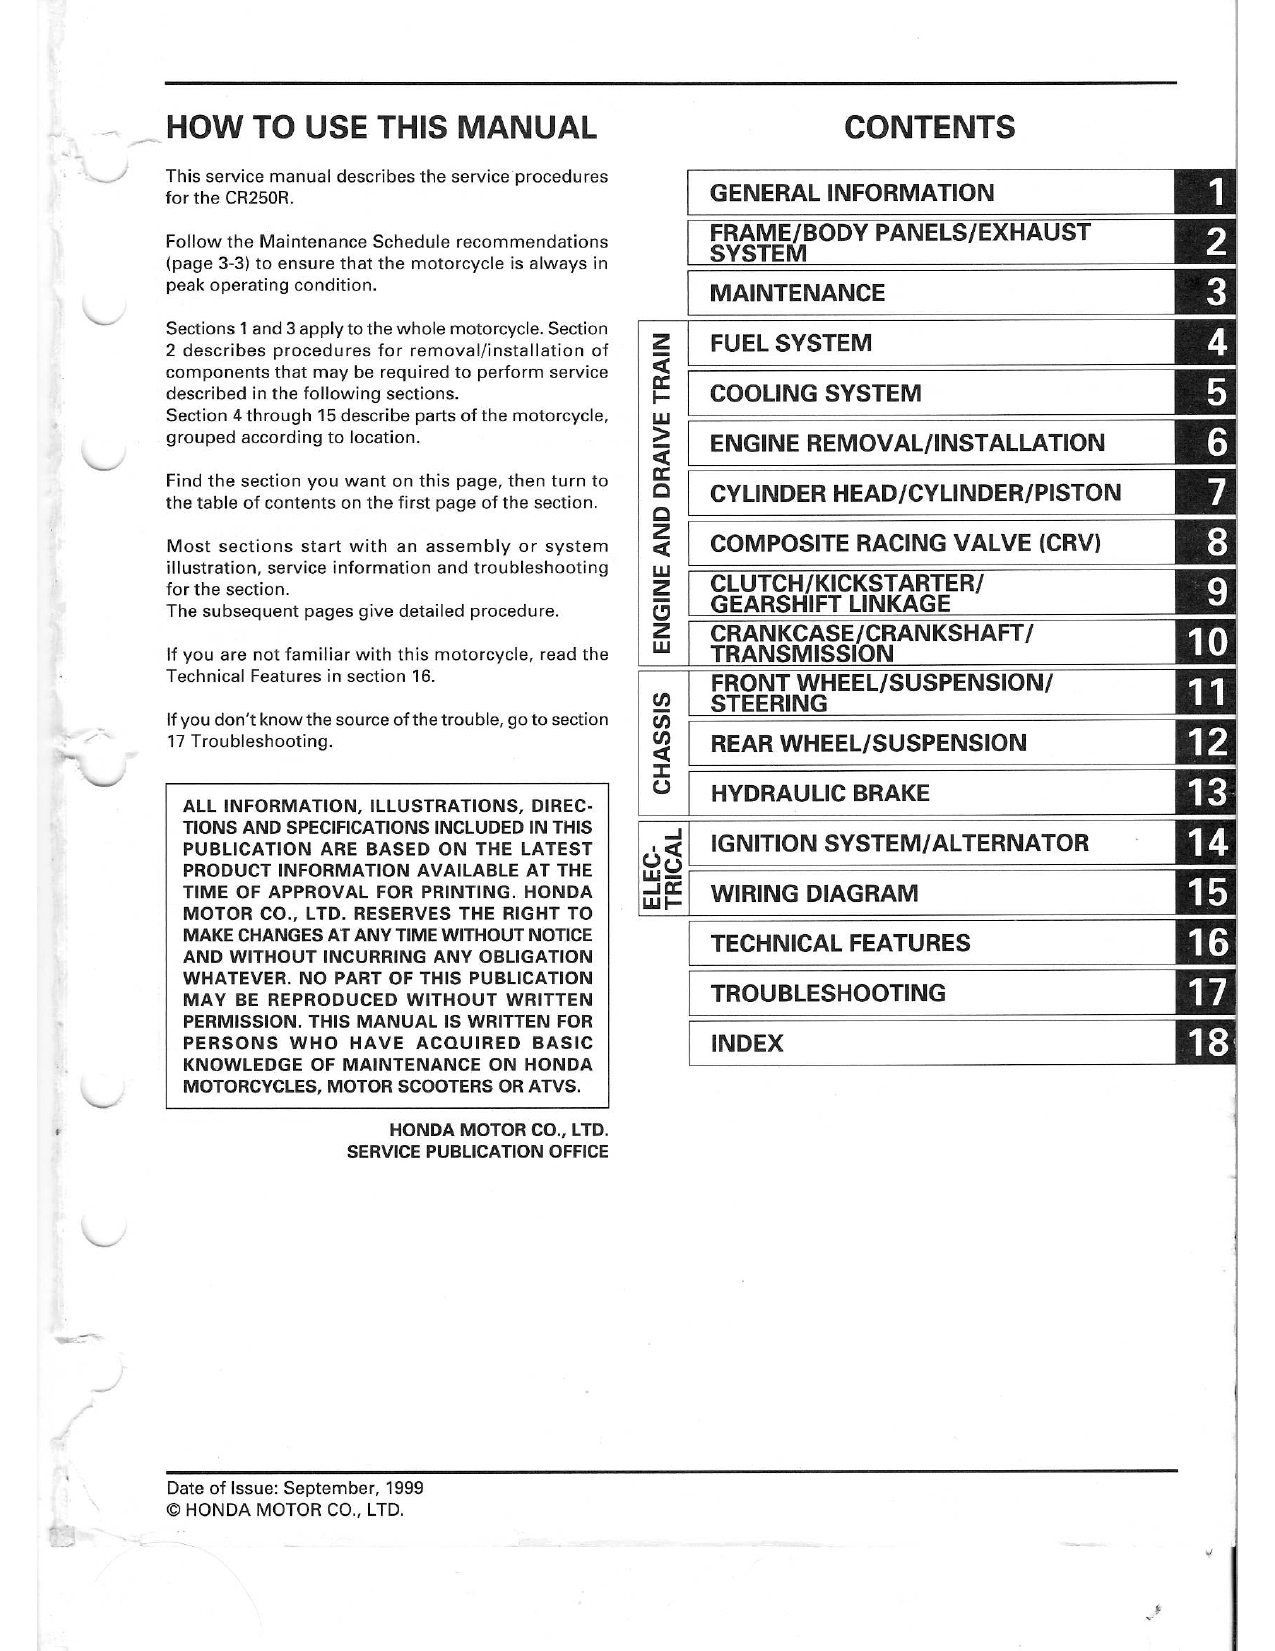 2000-2001 Honda CR250R service manual Preview image 2